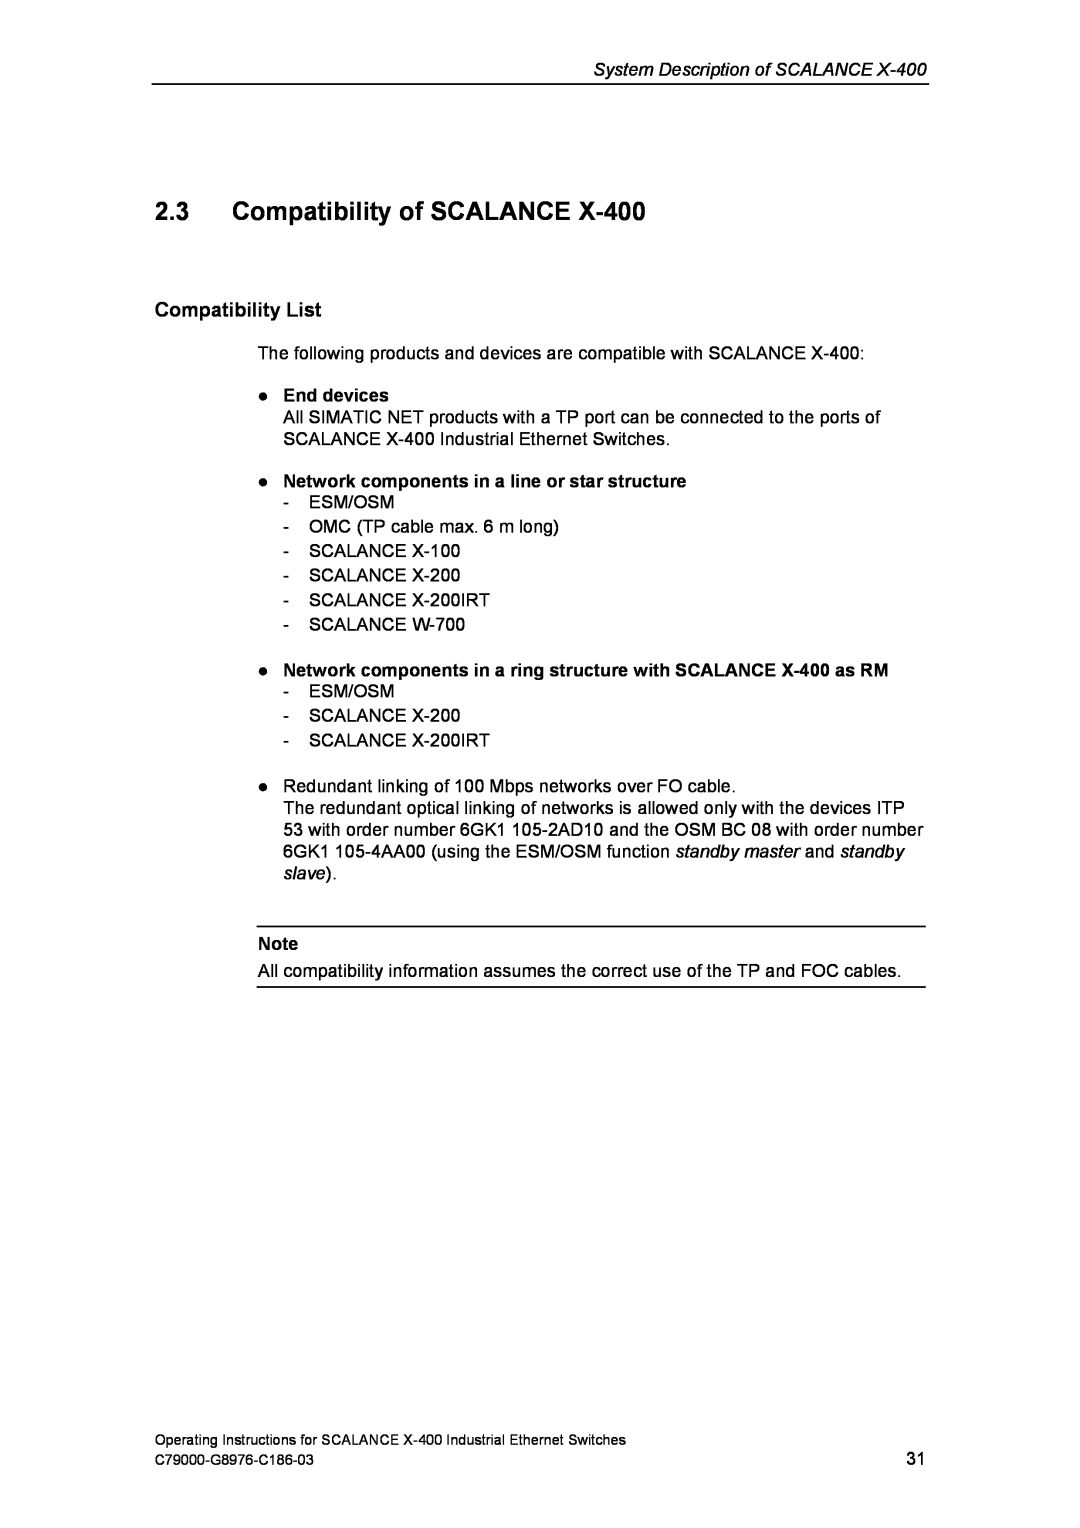 Siemens X-400 Compatibility of SCALANCE, Compatibility List, System Description of SCALANCE, End devices 